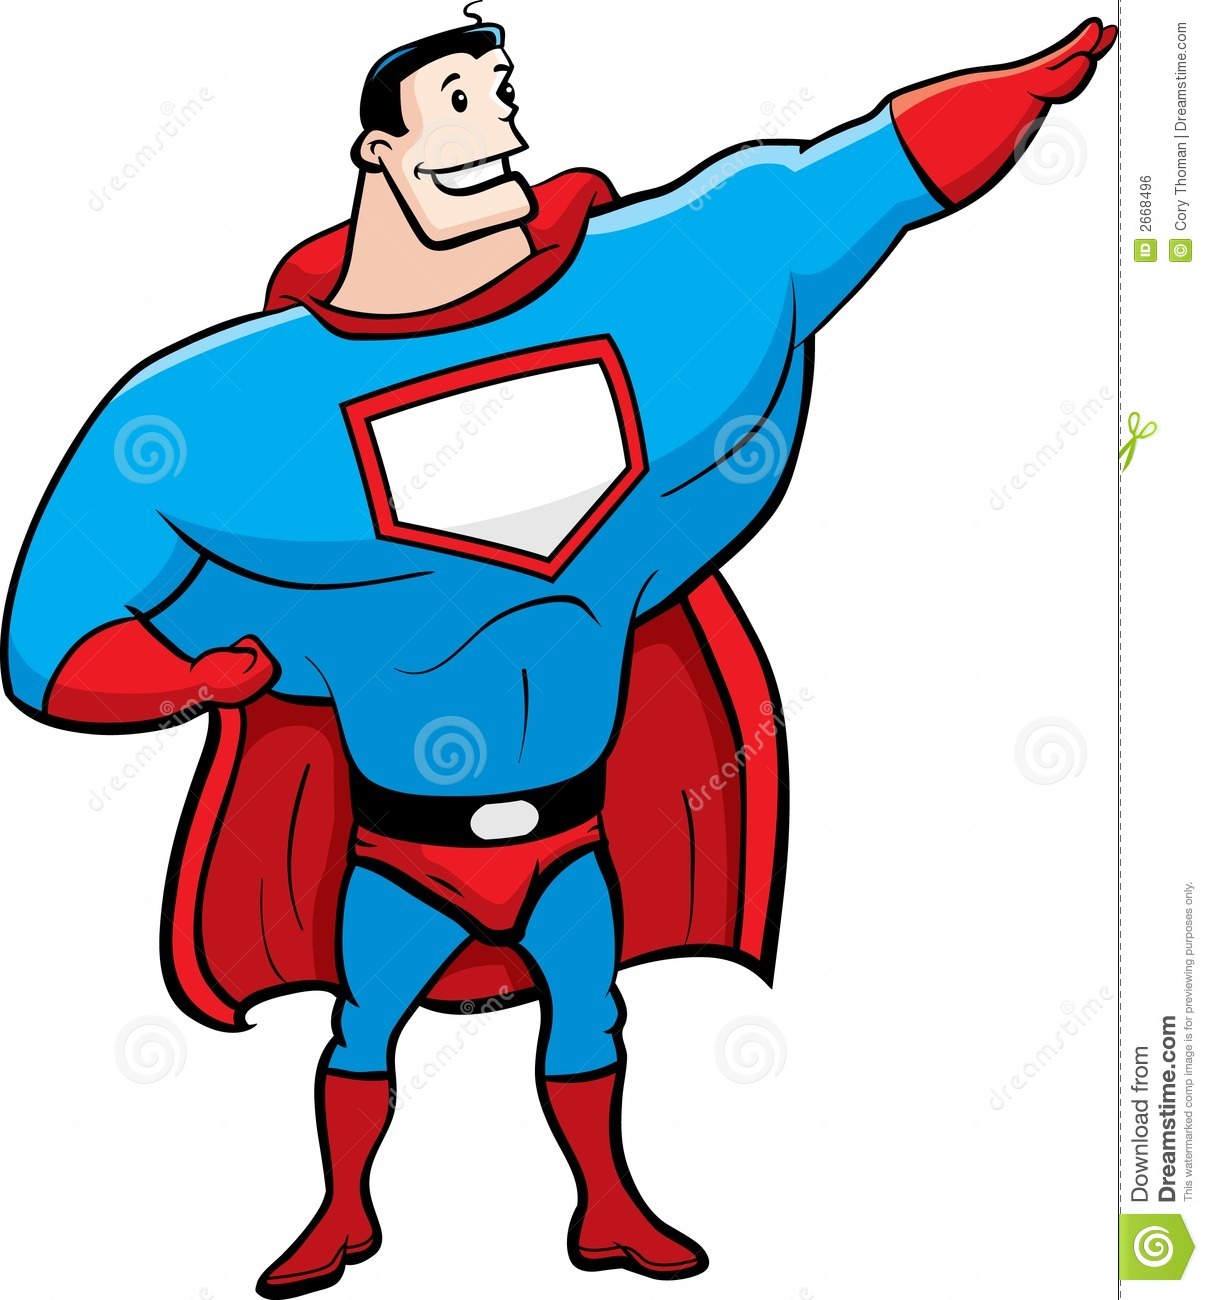 Superhero cape clipart.